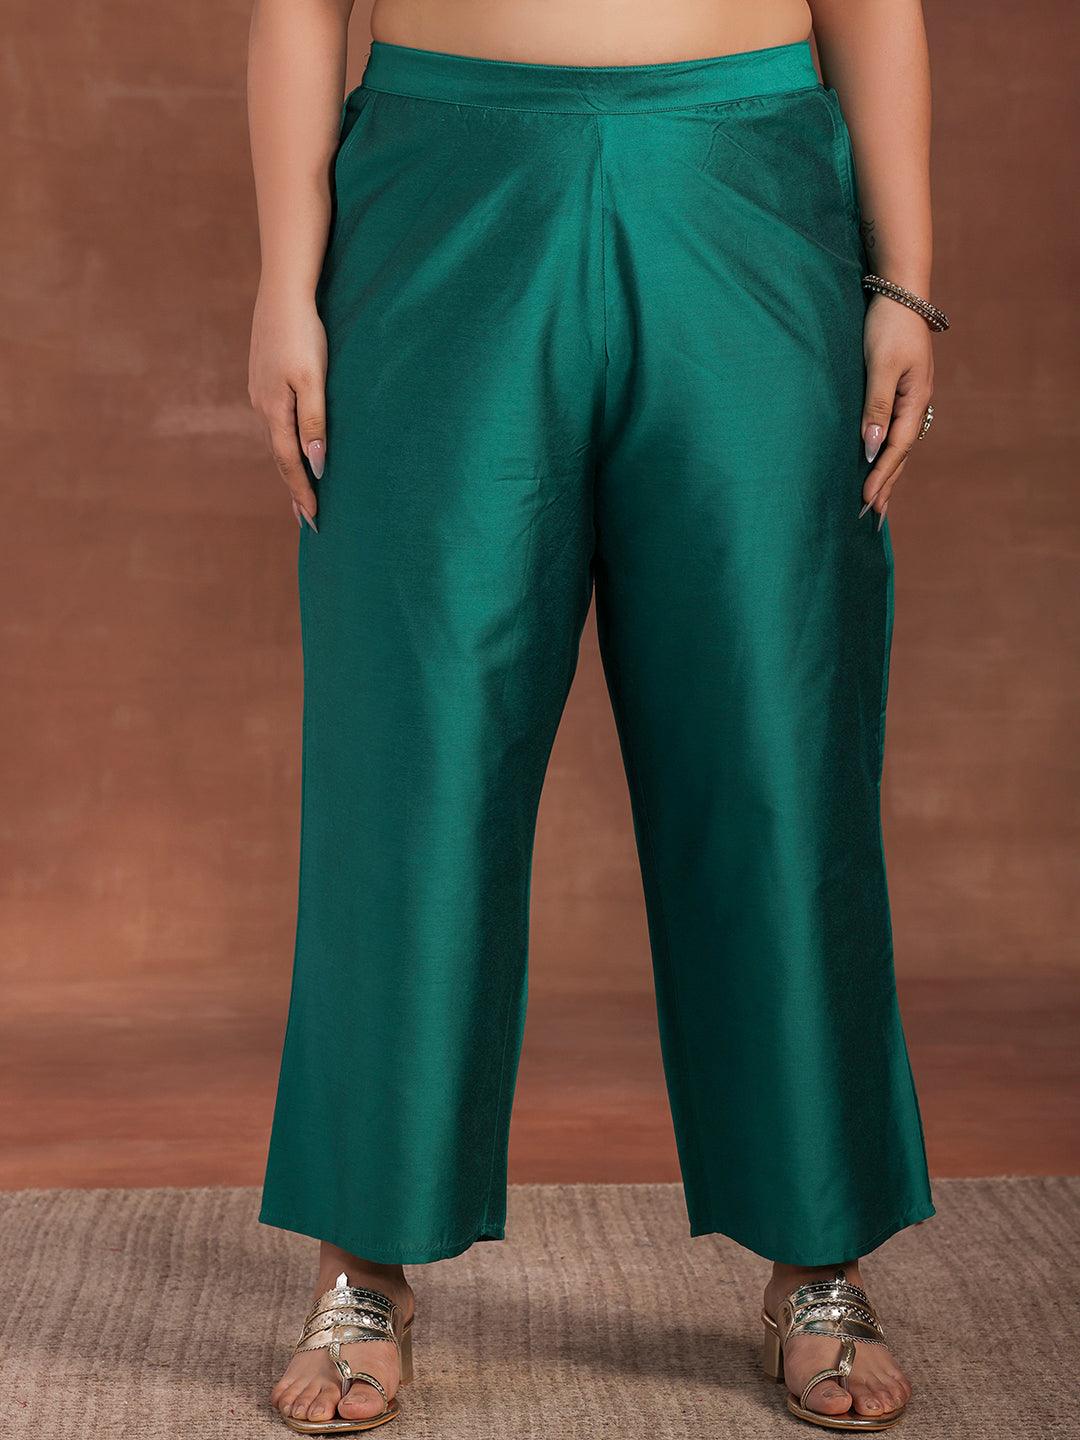 Plus Size Green Yoke Design Silk Blend Straight Suit With Dupatta